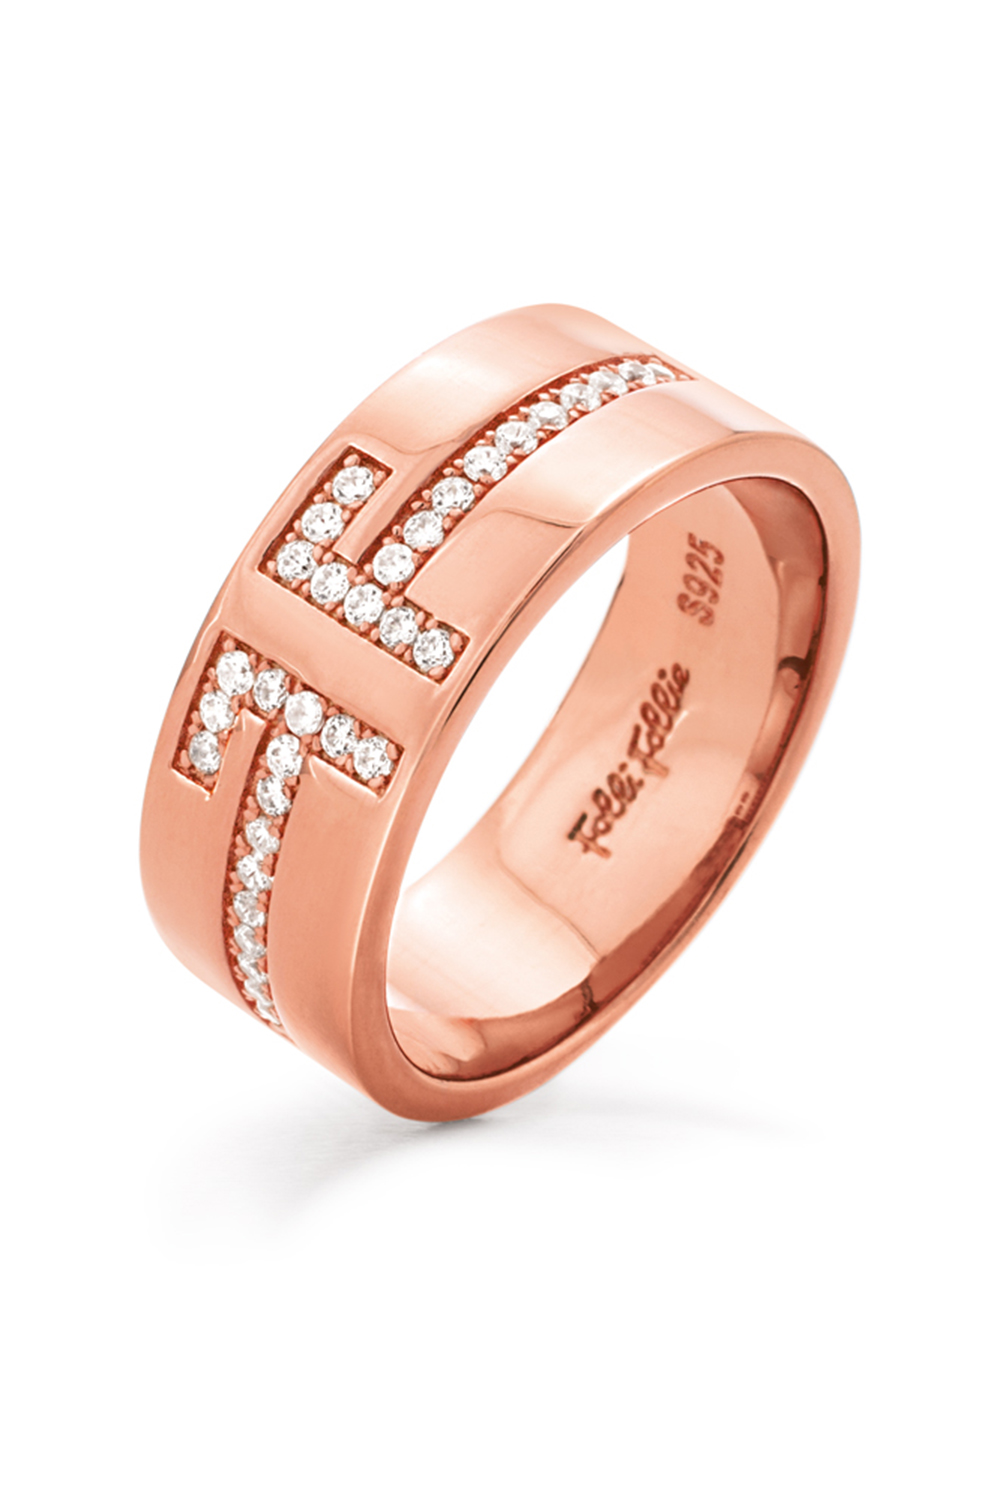 FOLLI FOLLIE – Γυναικειο ασημενιο δαχτυλιδι FOLLI FOLLIE MY FF ροζ χρυσο